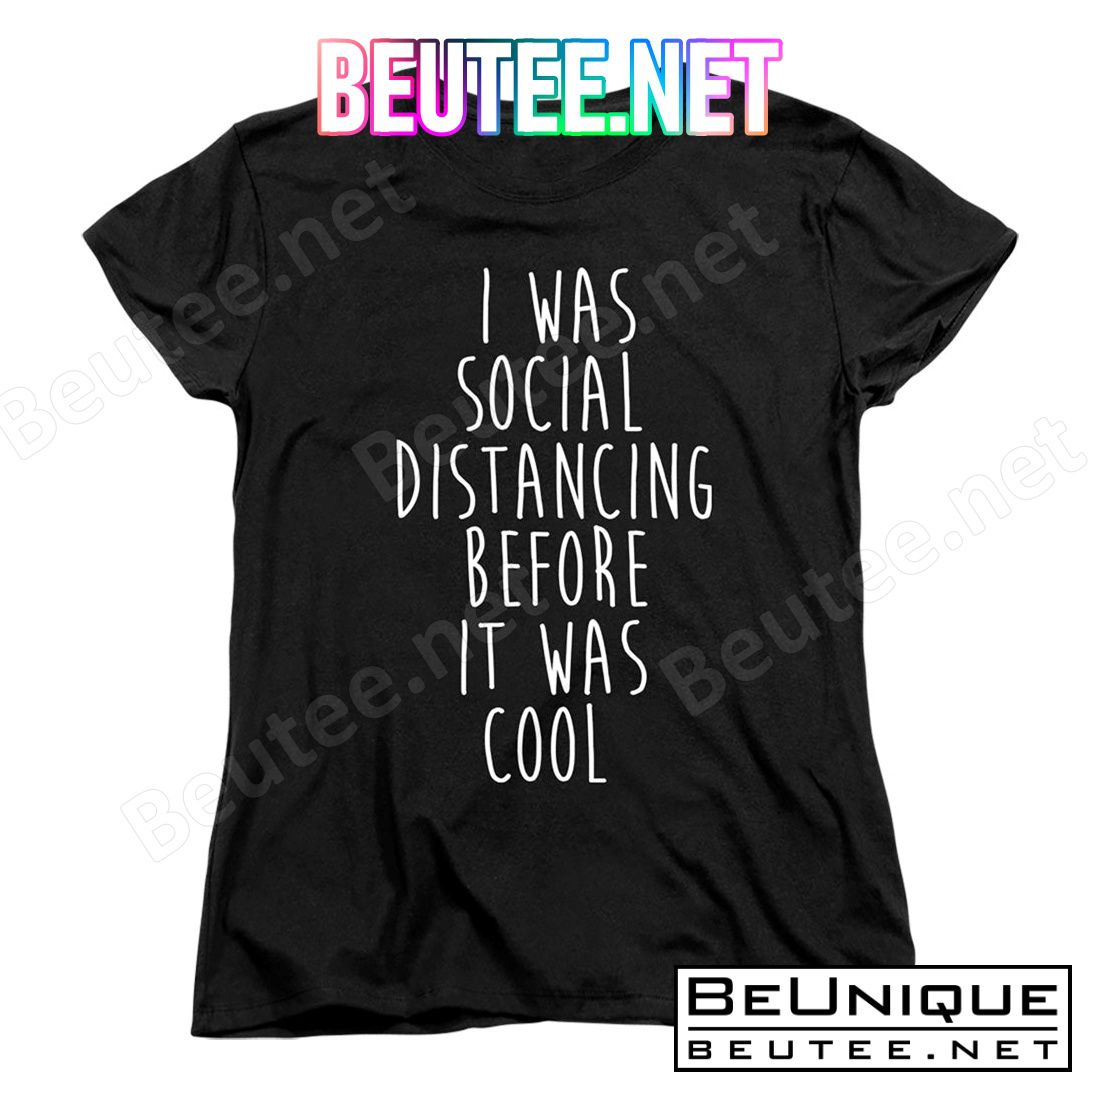 What's Trending Social Distancing B4 T-shirt